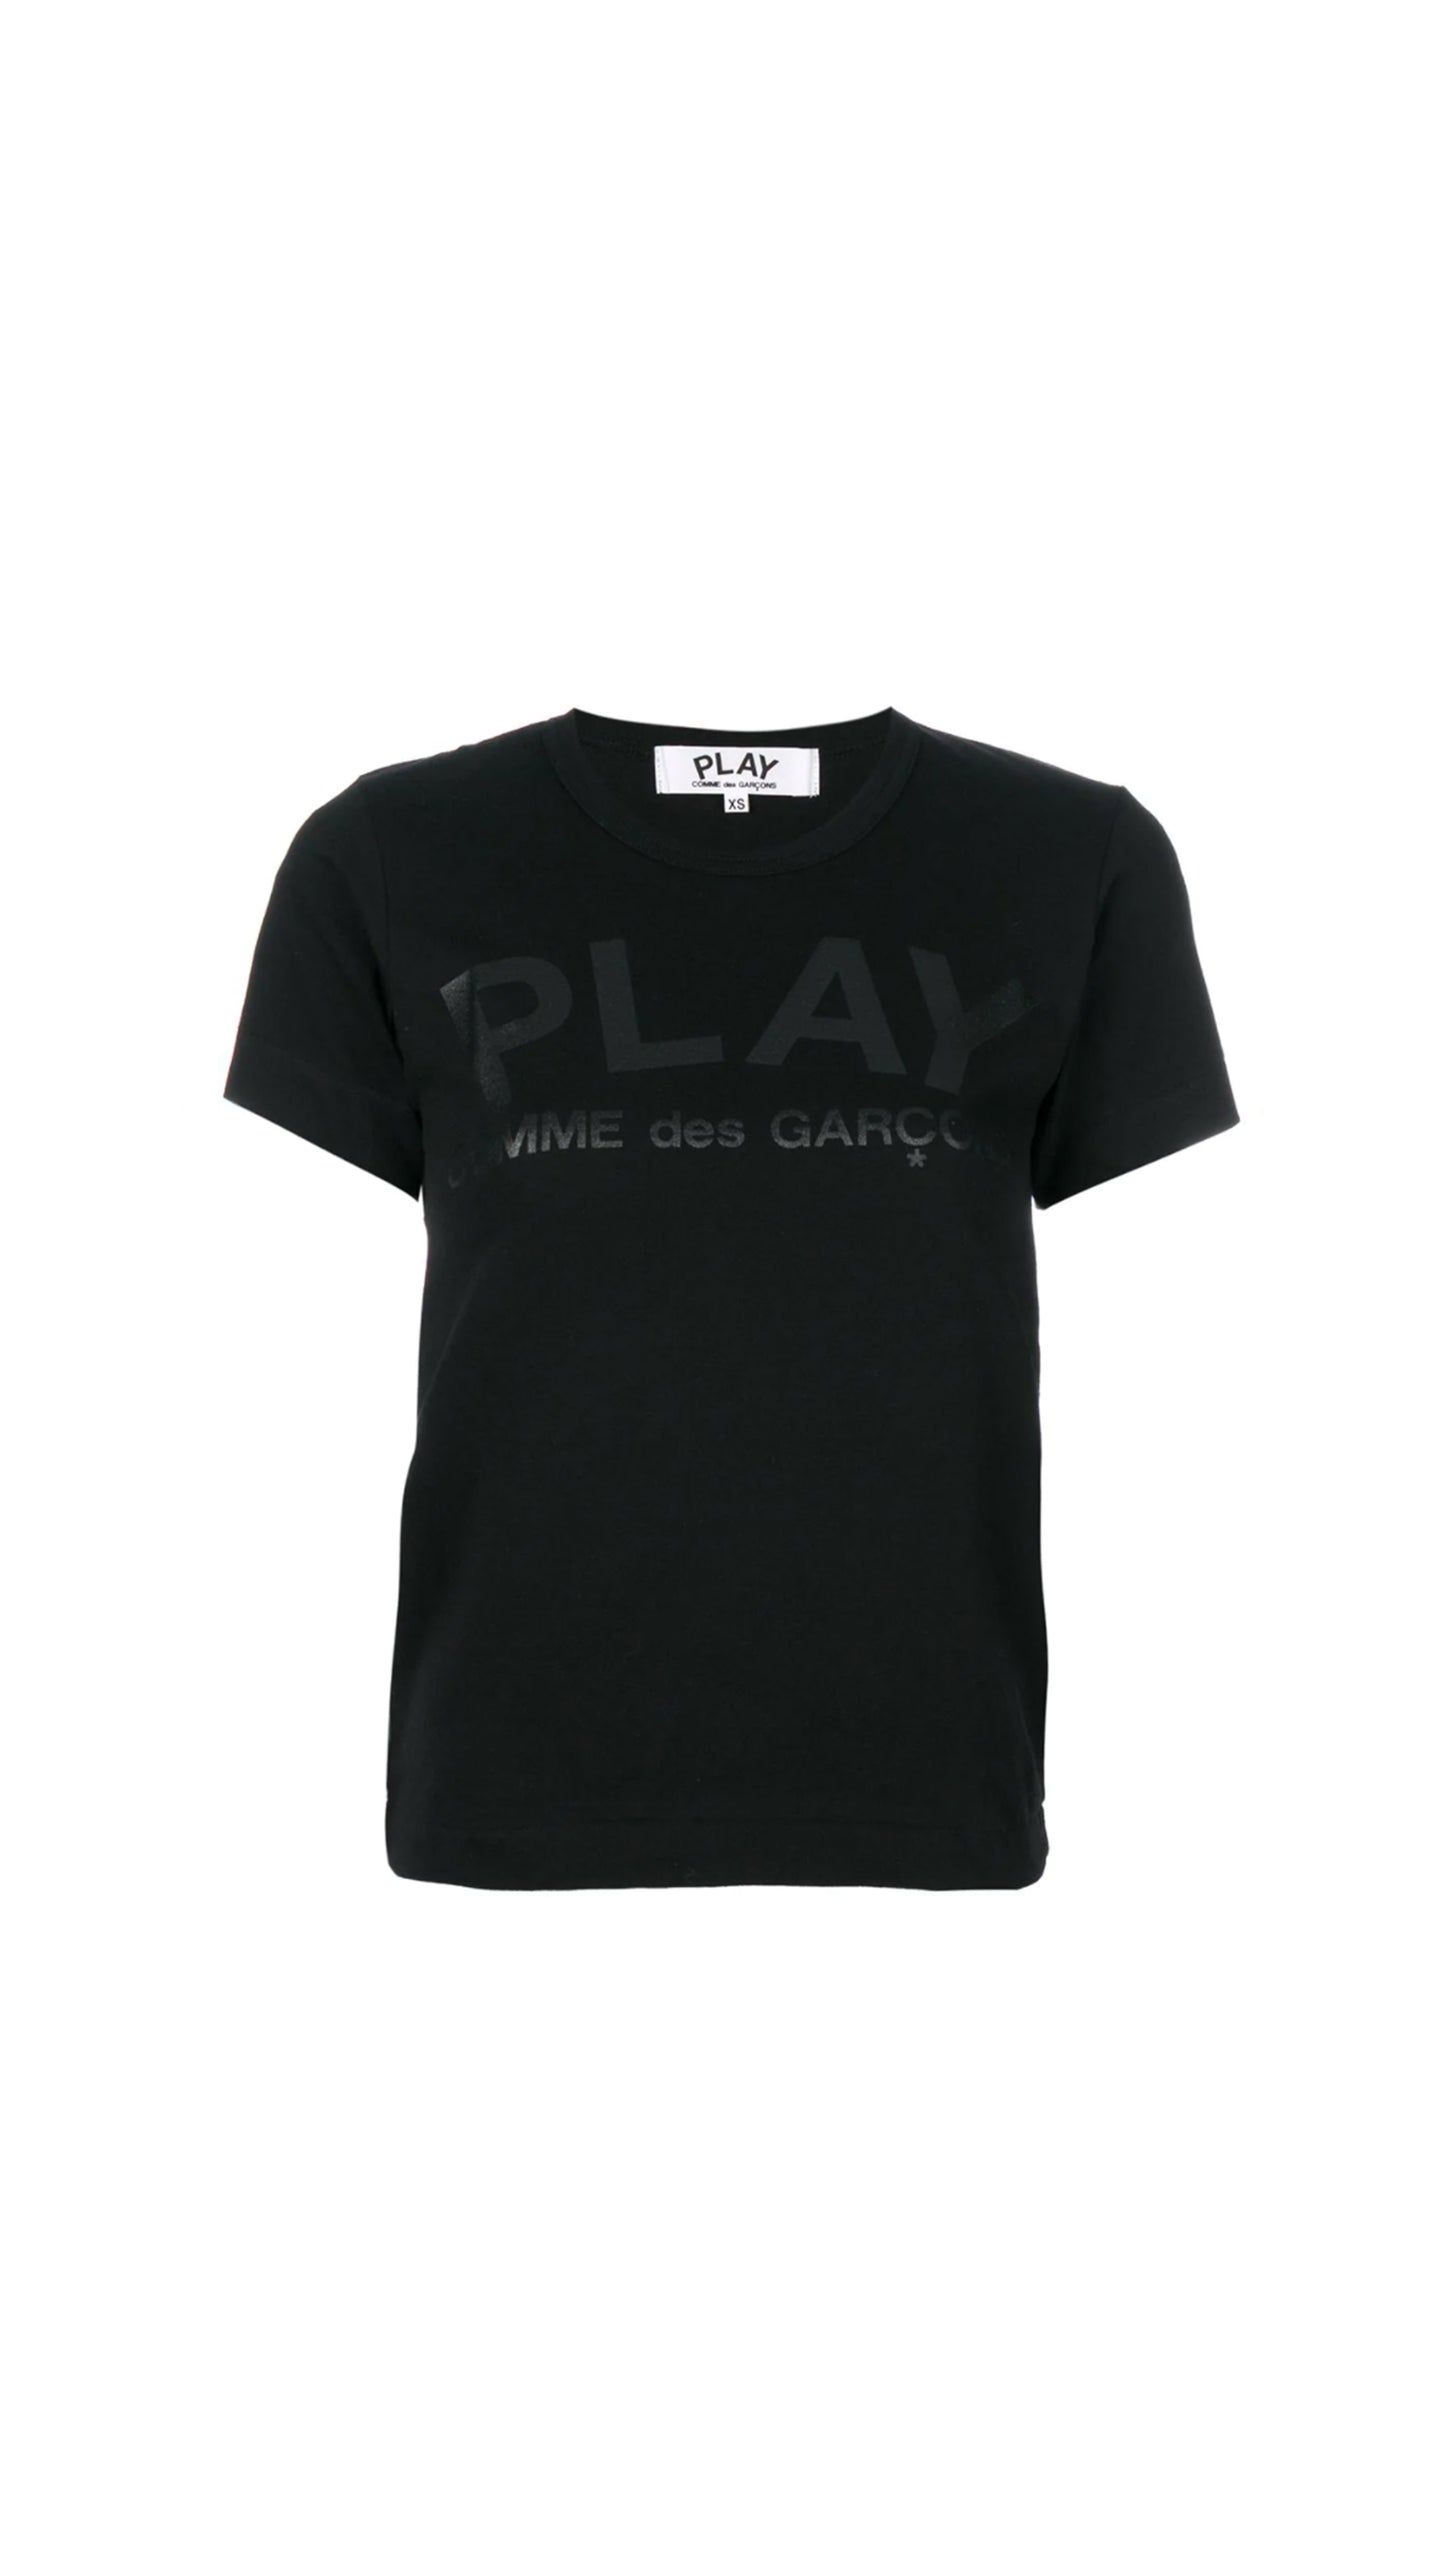 Printed T-shirt - Black.